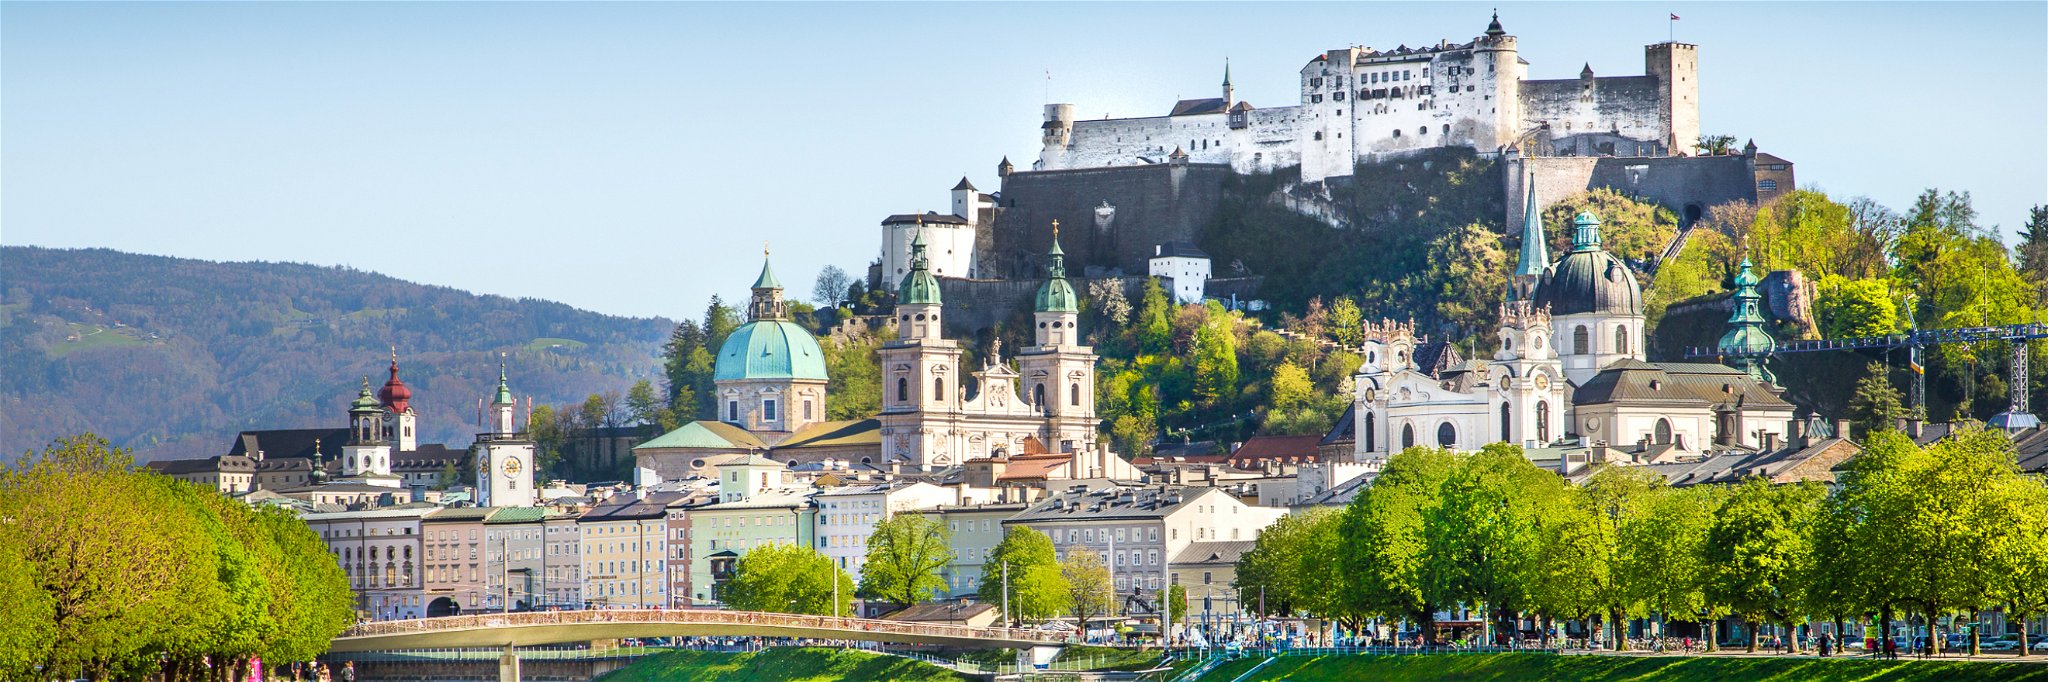 Picture-perfect Salzburg.